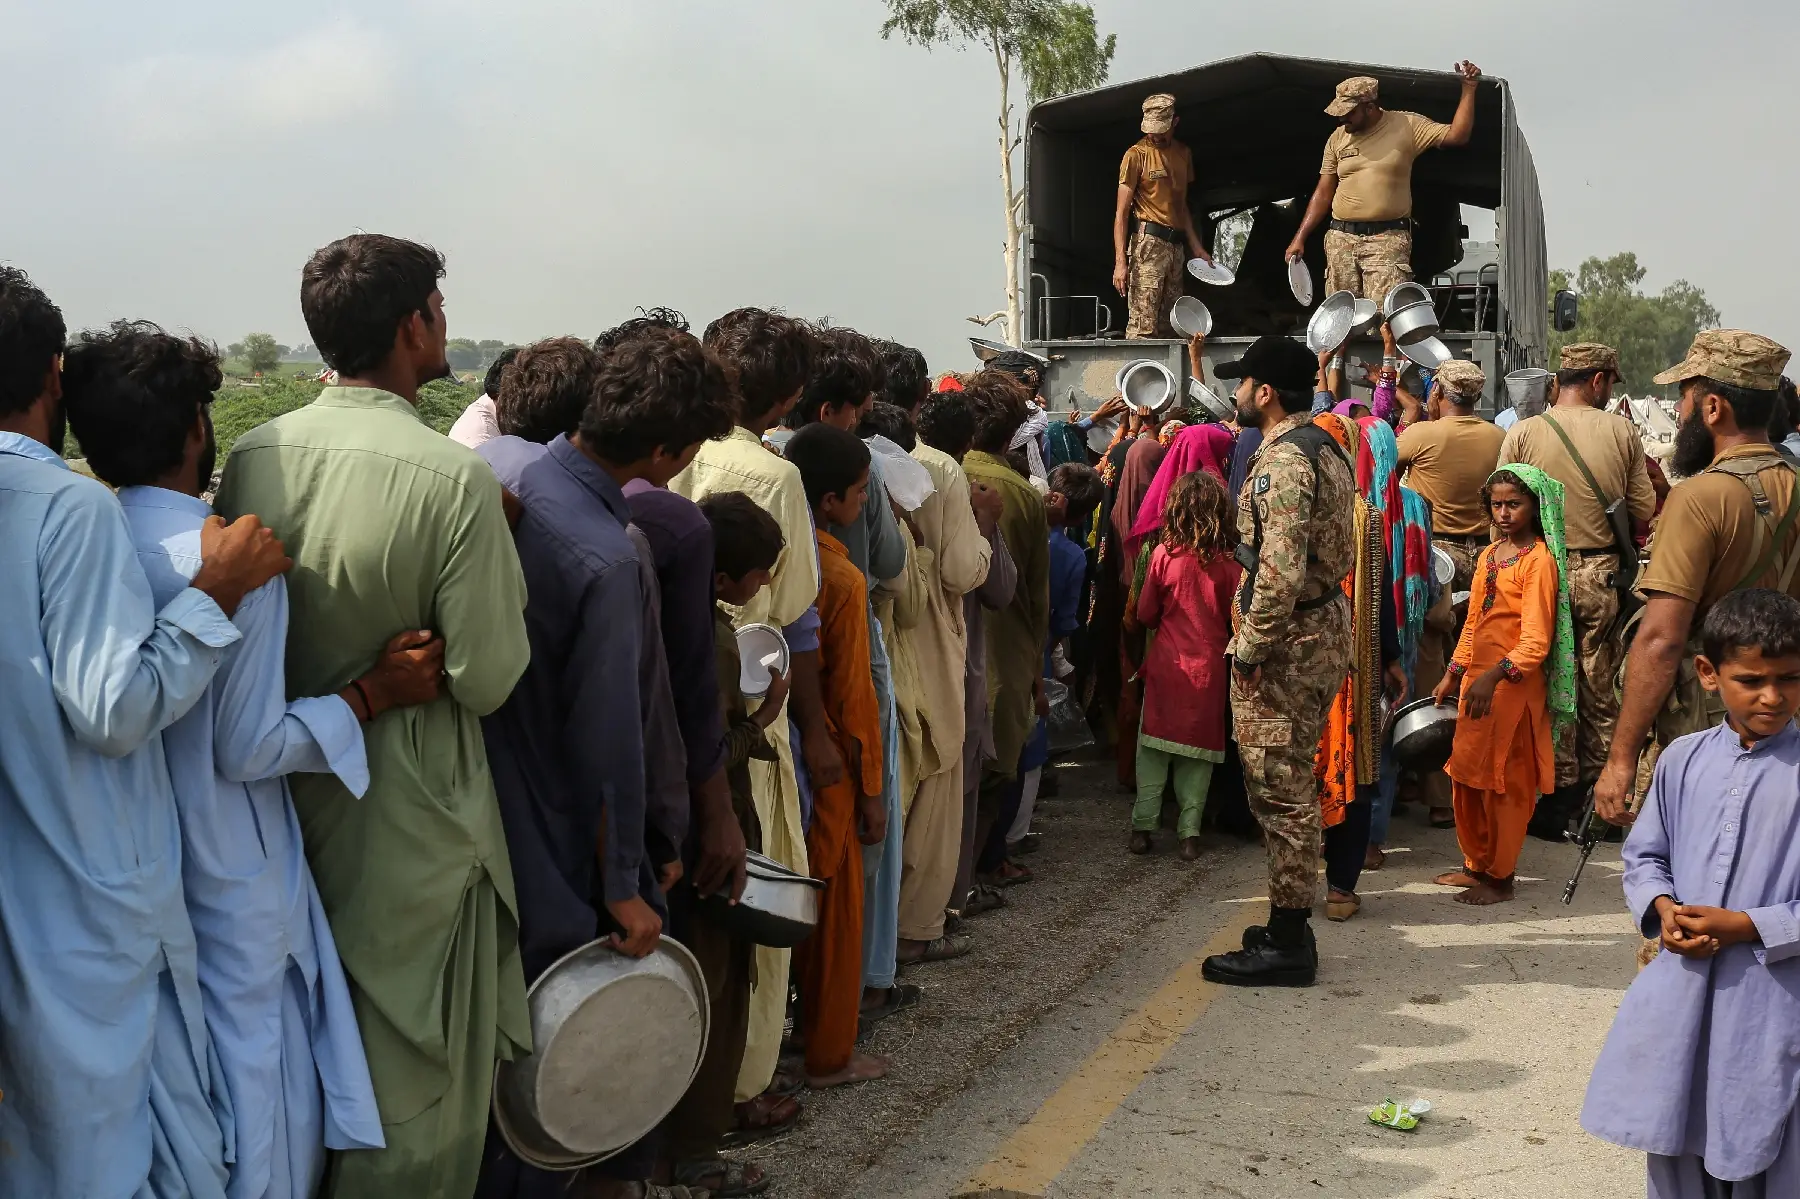 Ejército entregando alimento a campamento de desplazados en Pakistán - Foto Shahid Saeed Mirza/AFP